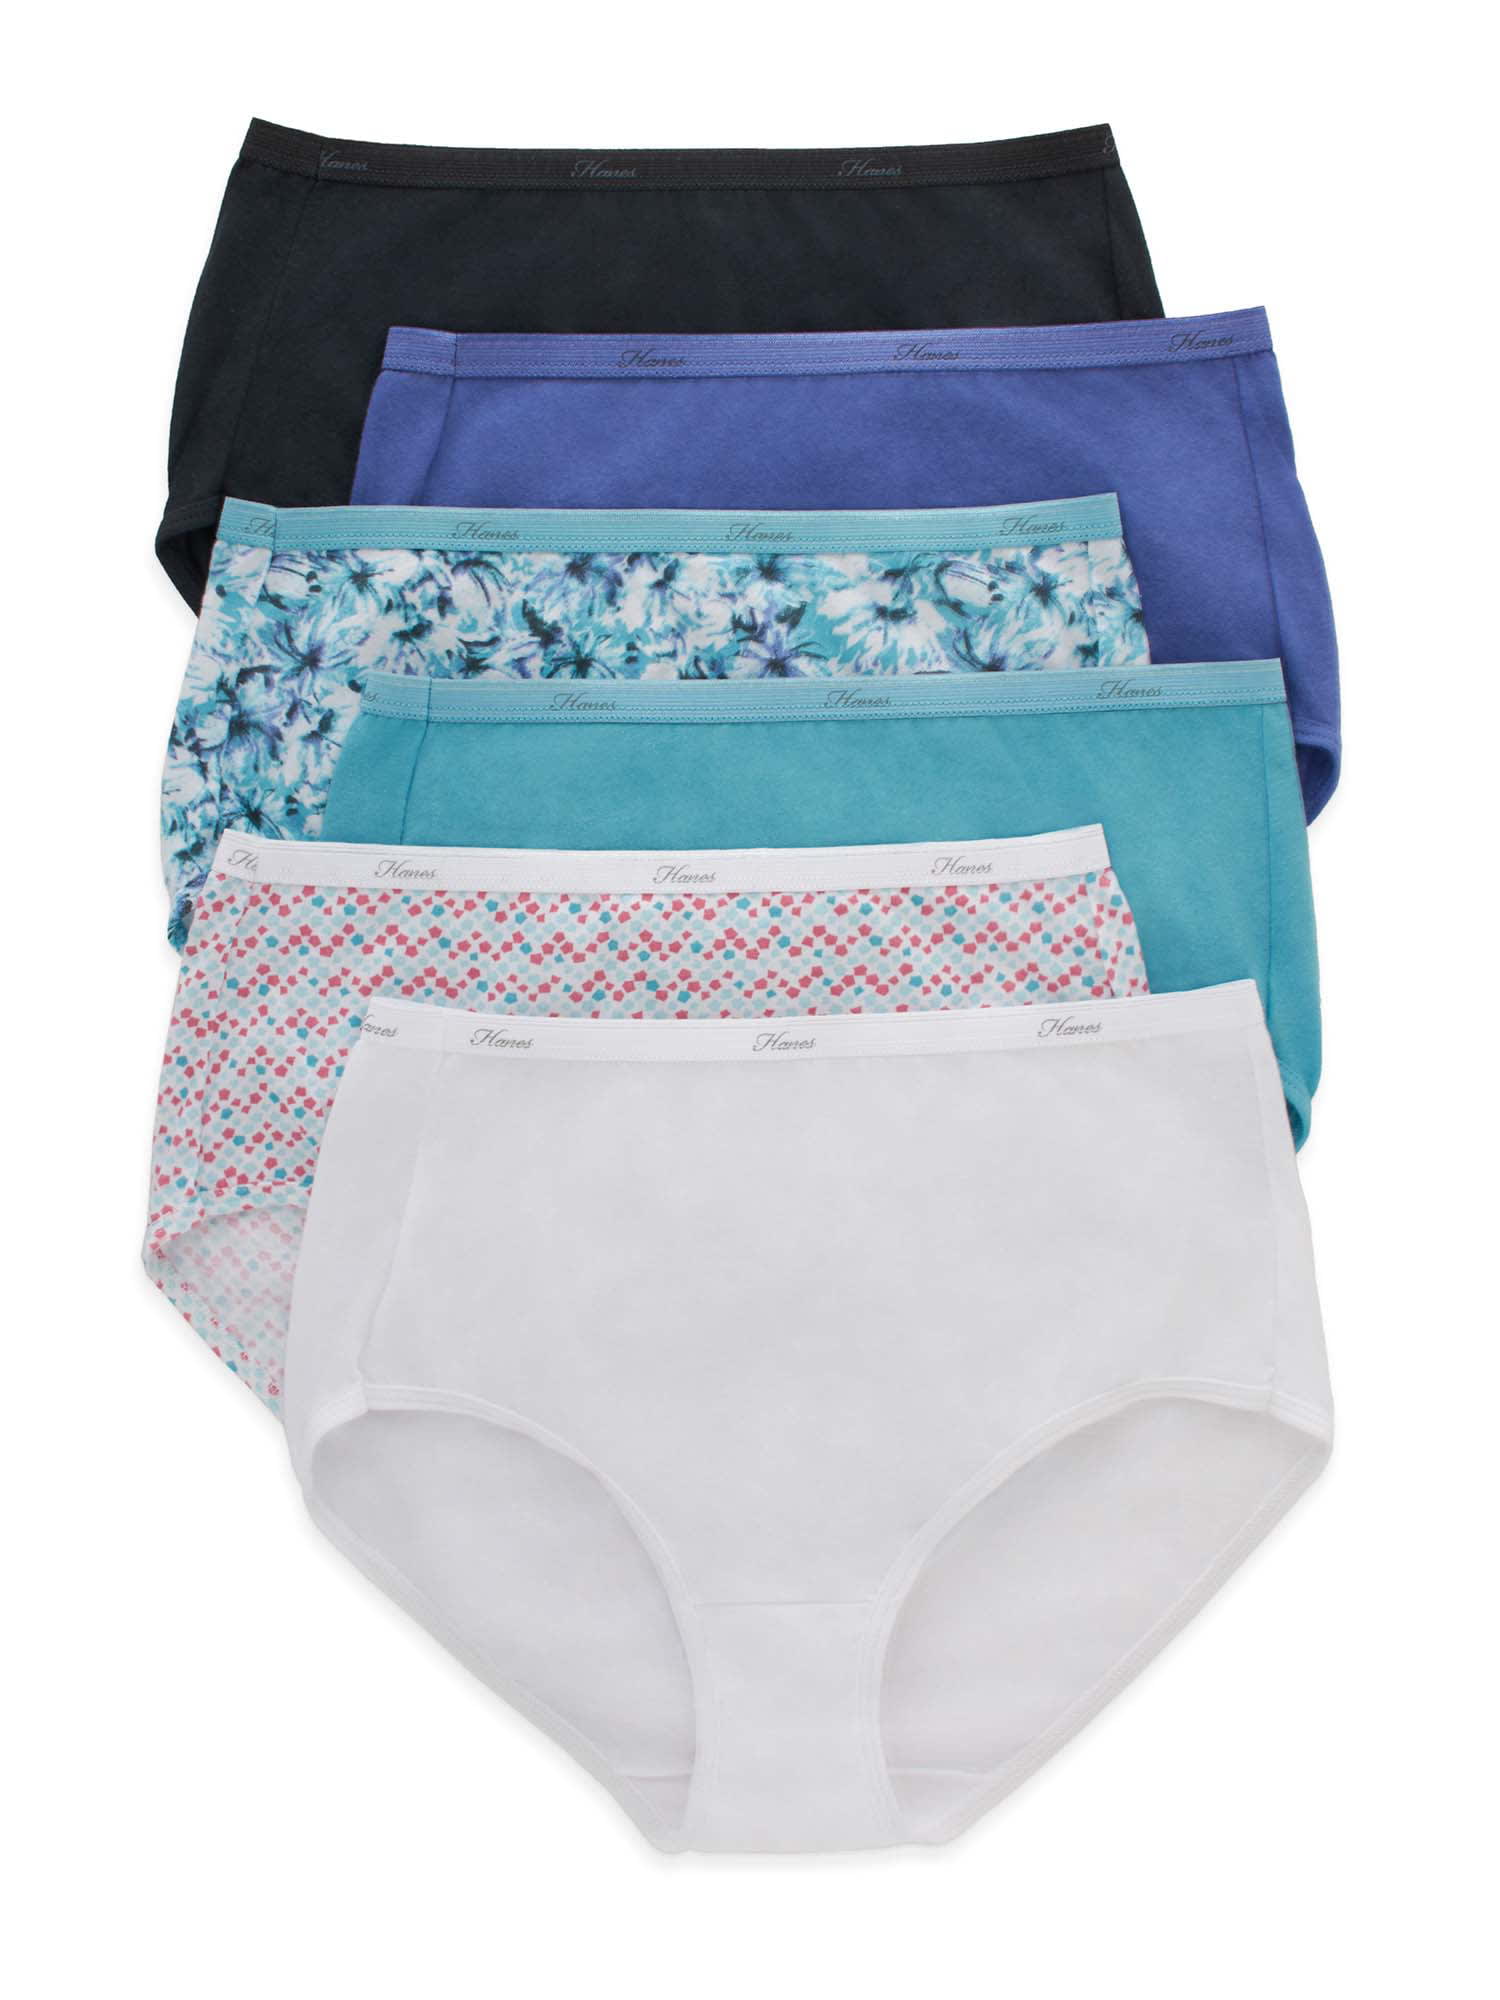 Joyspun Woman’s Seamless High Cut Brief Underwear 6 Pair Assorted Color XXXL